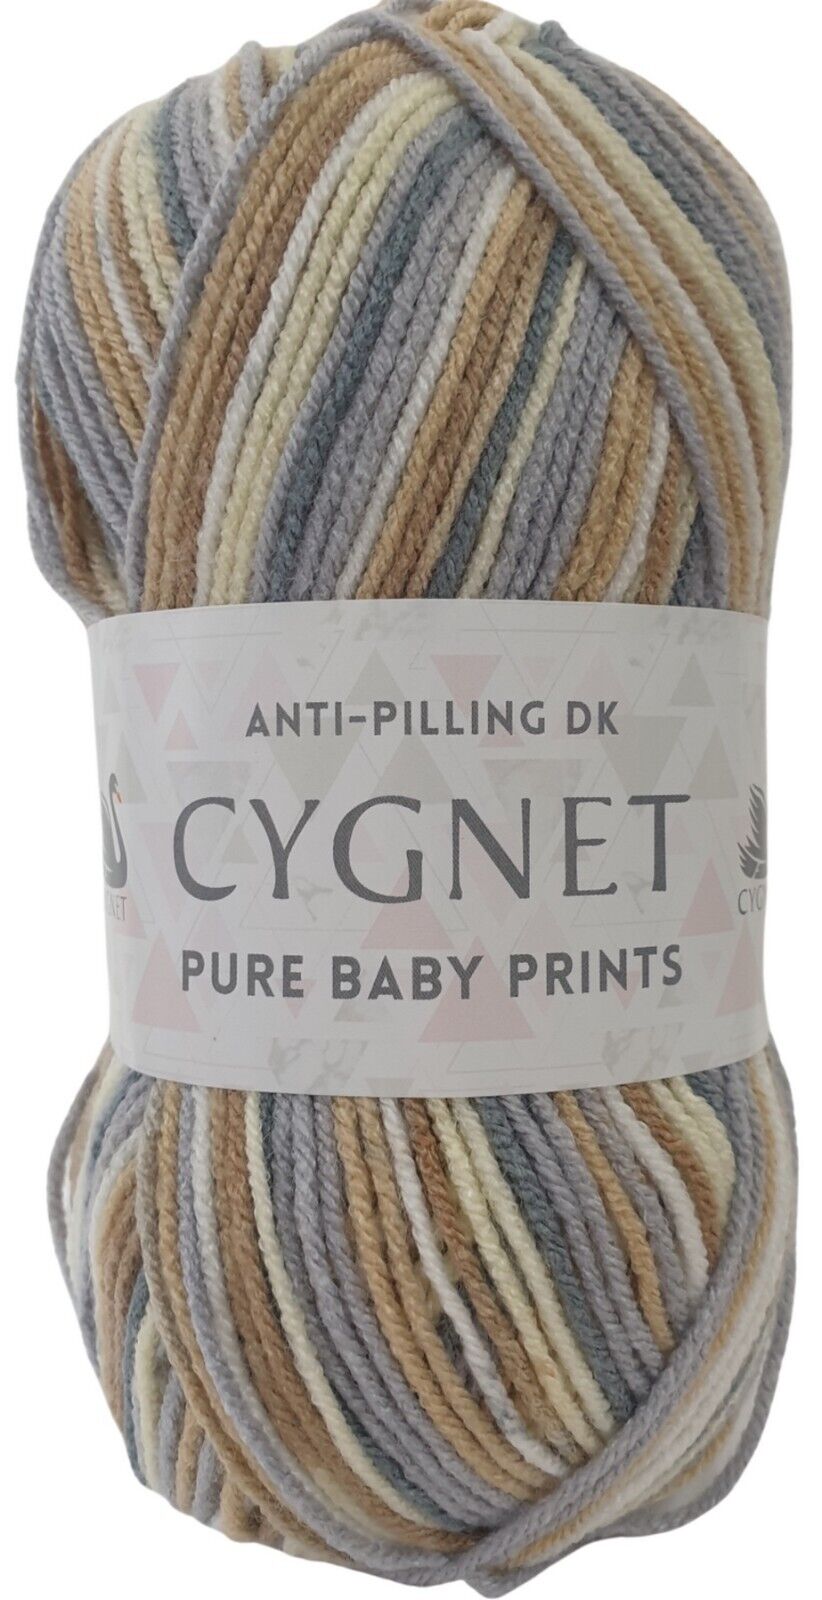 Cygnet PURE BABY PRINTS DK Knitting Yarn / Wool - 100g - Toffee Rose